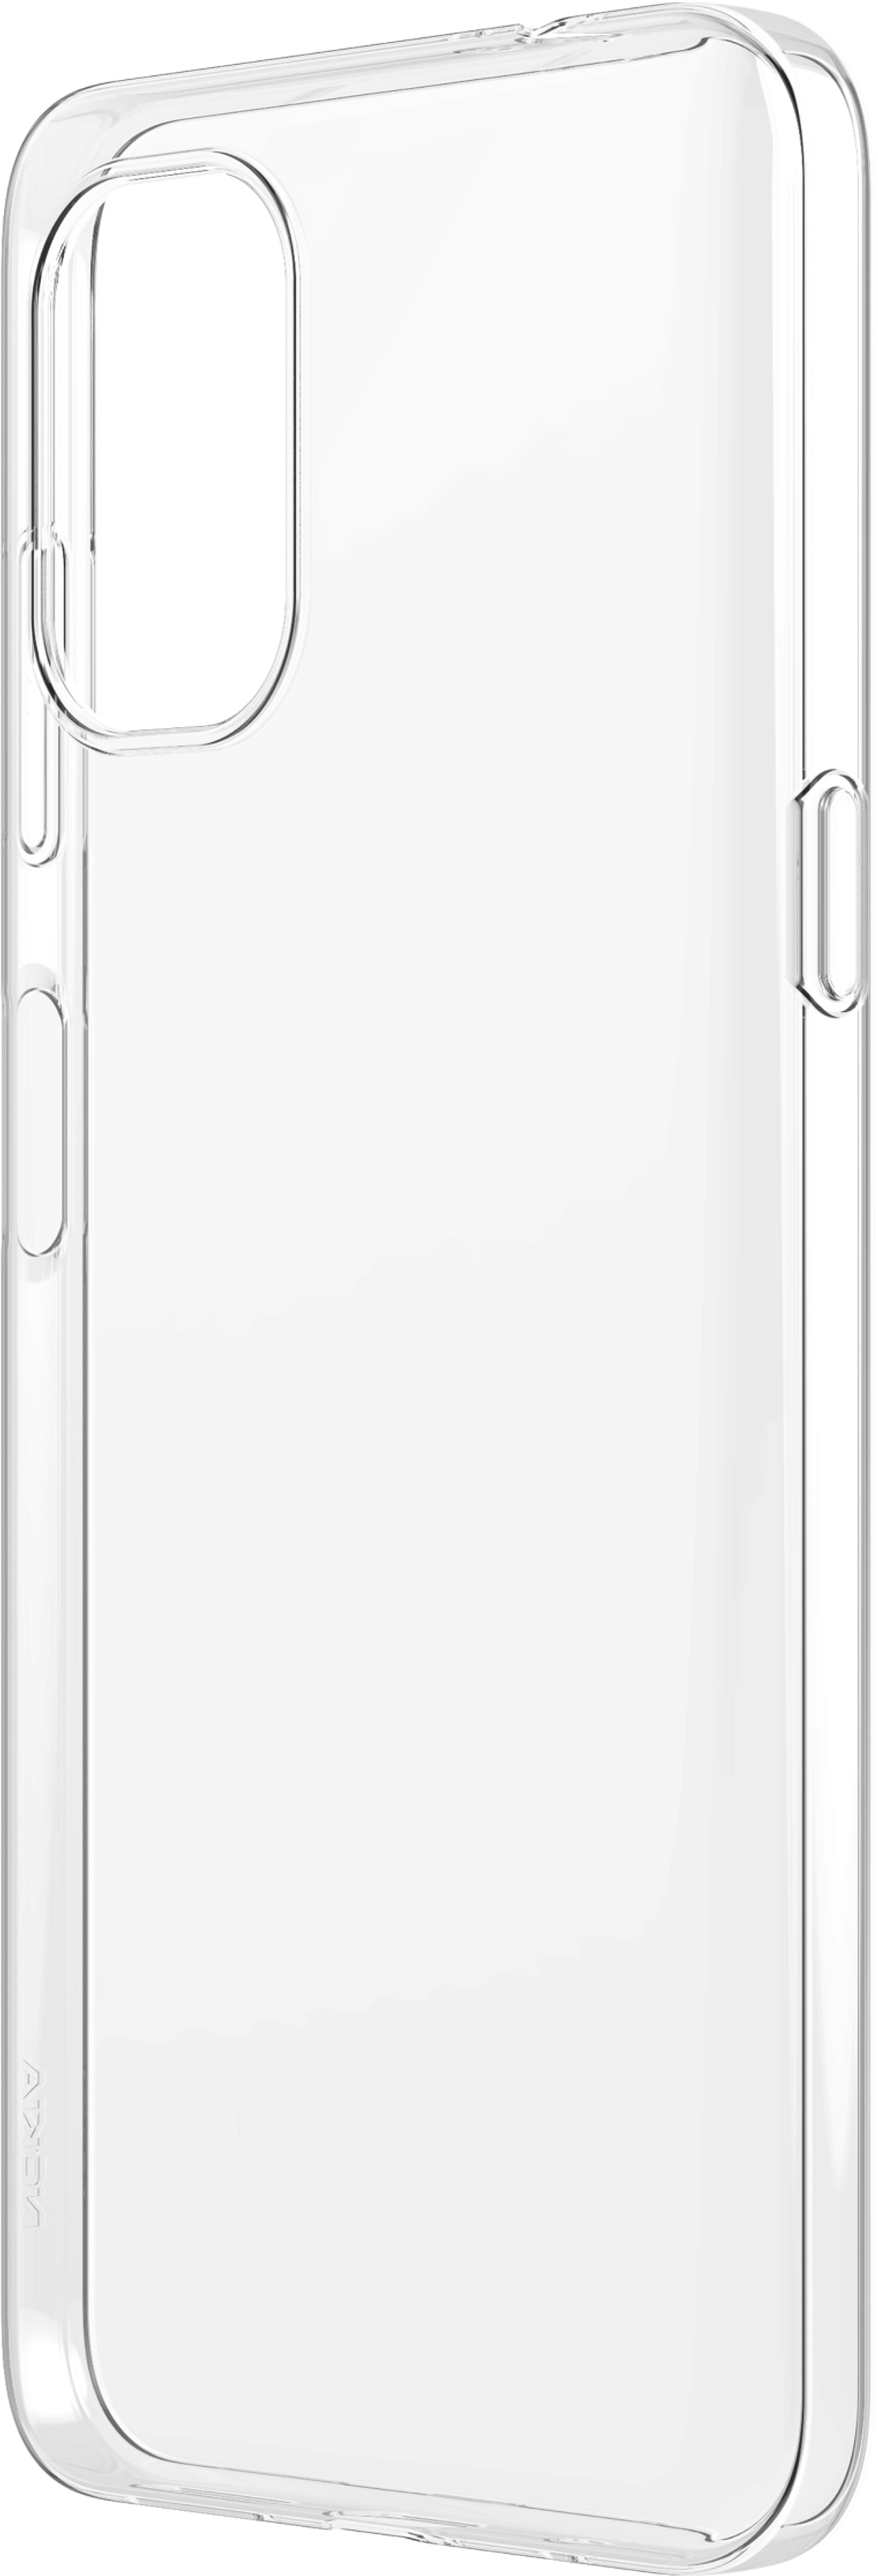 Nokia Clear Case | transparent case